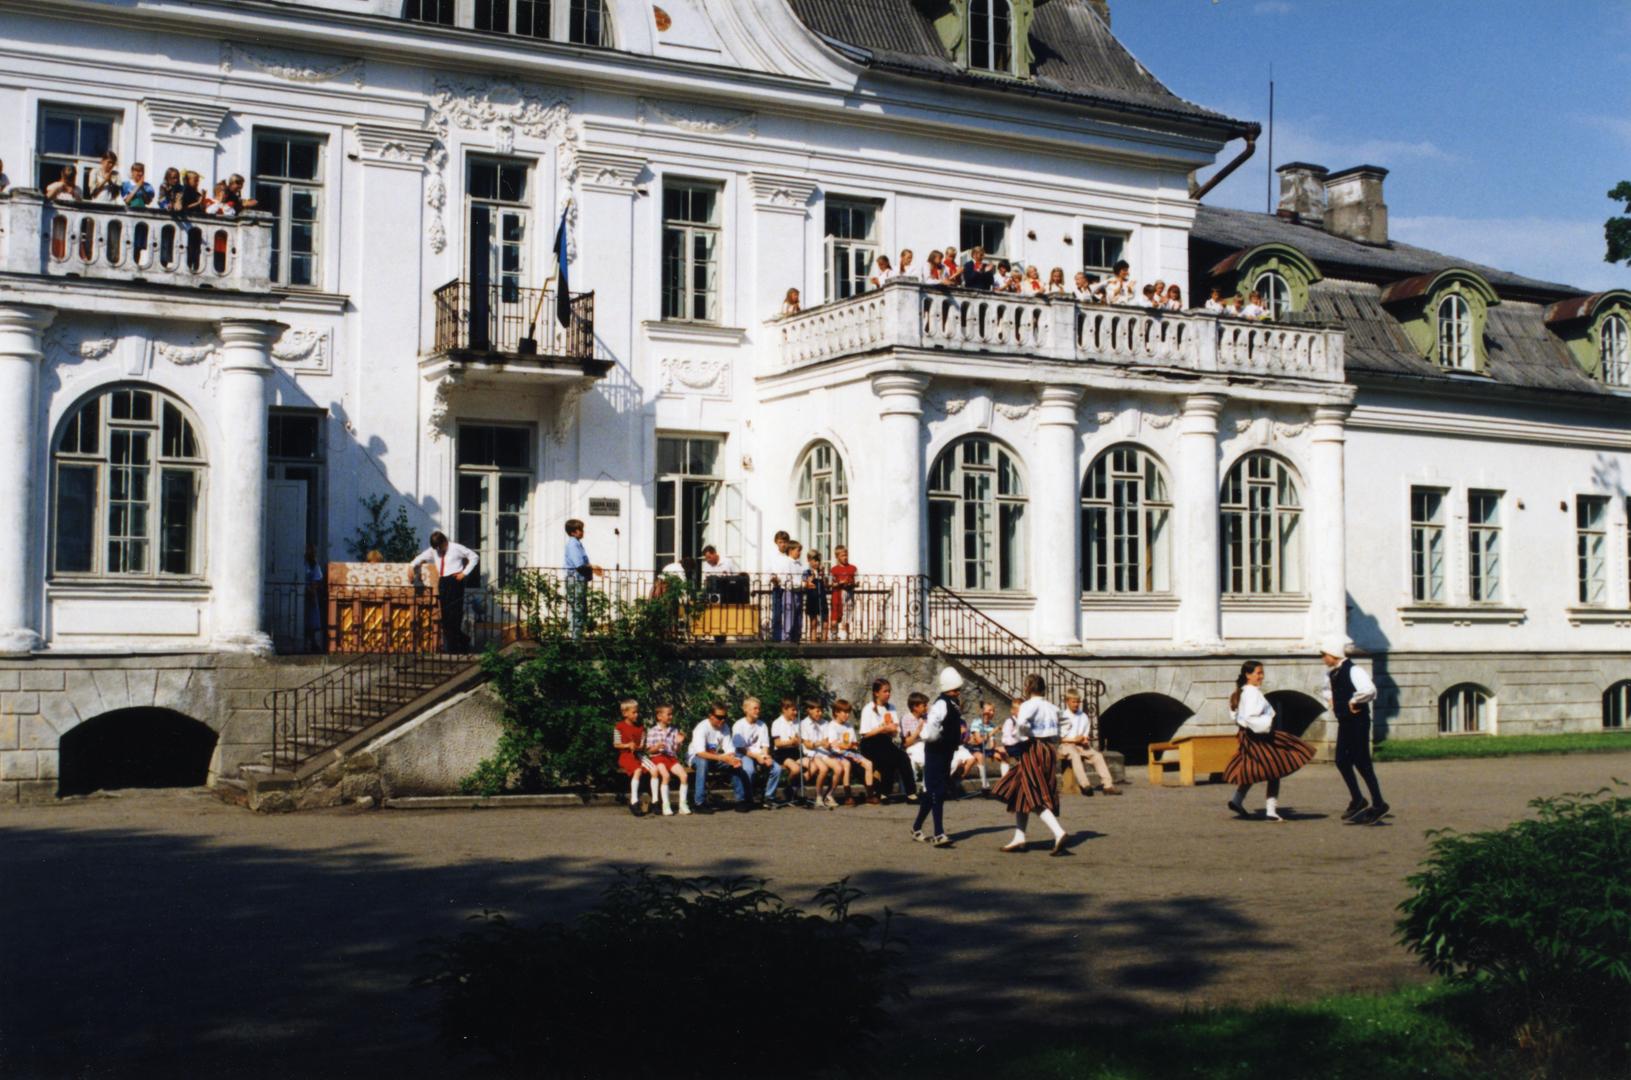 Building of the Laupa Main School of Järva County on June 3, 1995